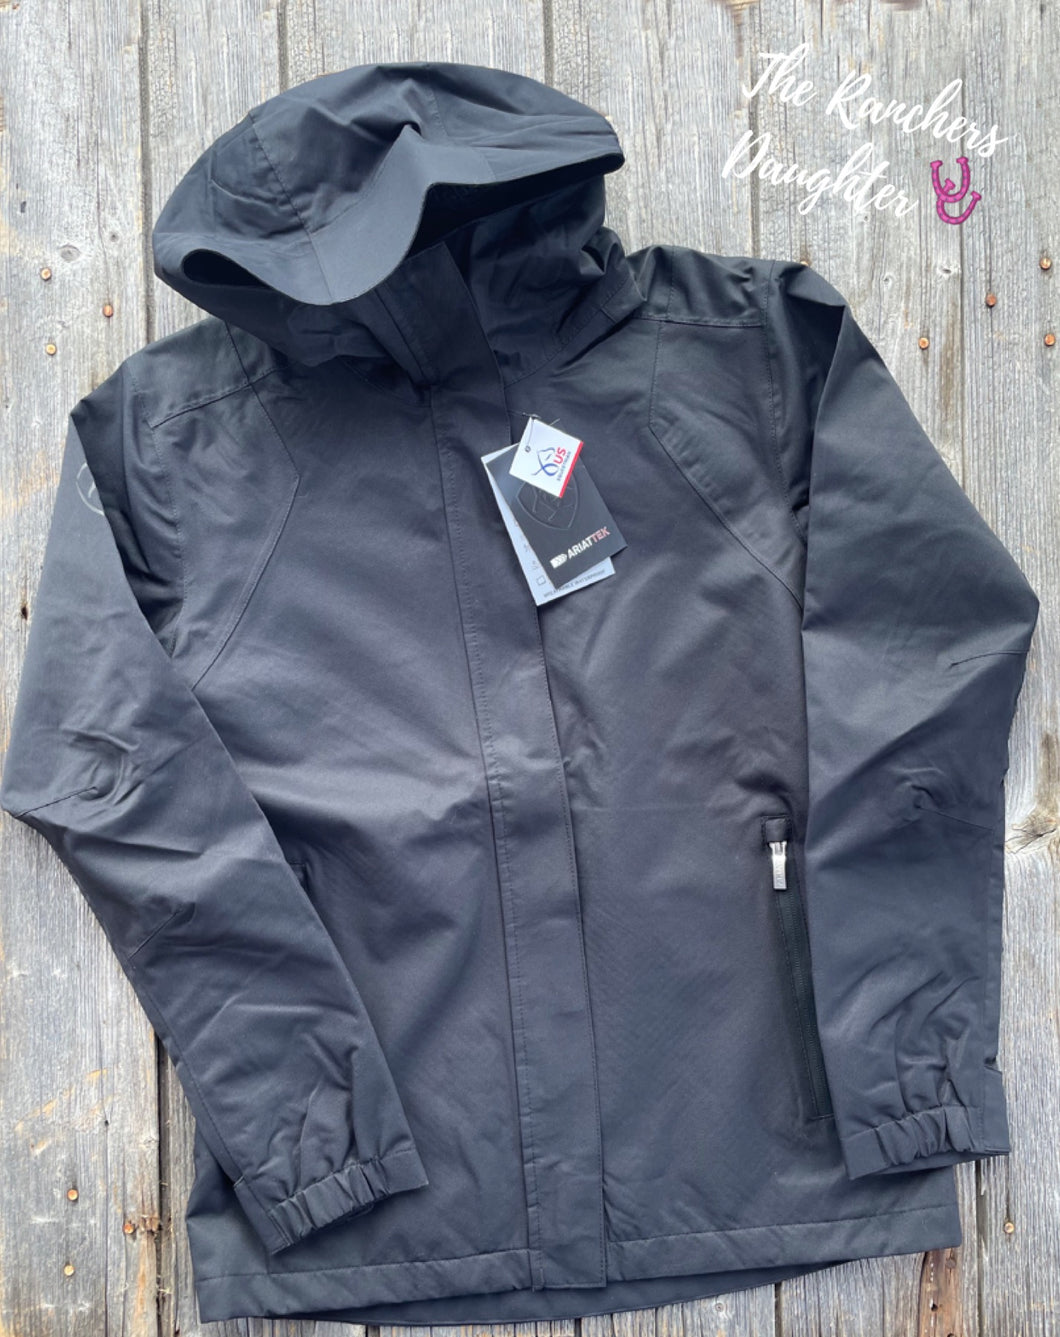 Ariat Spectator Black  Waterproof Jacket